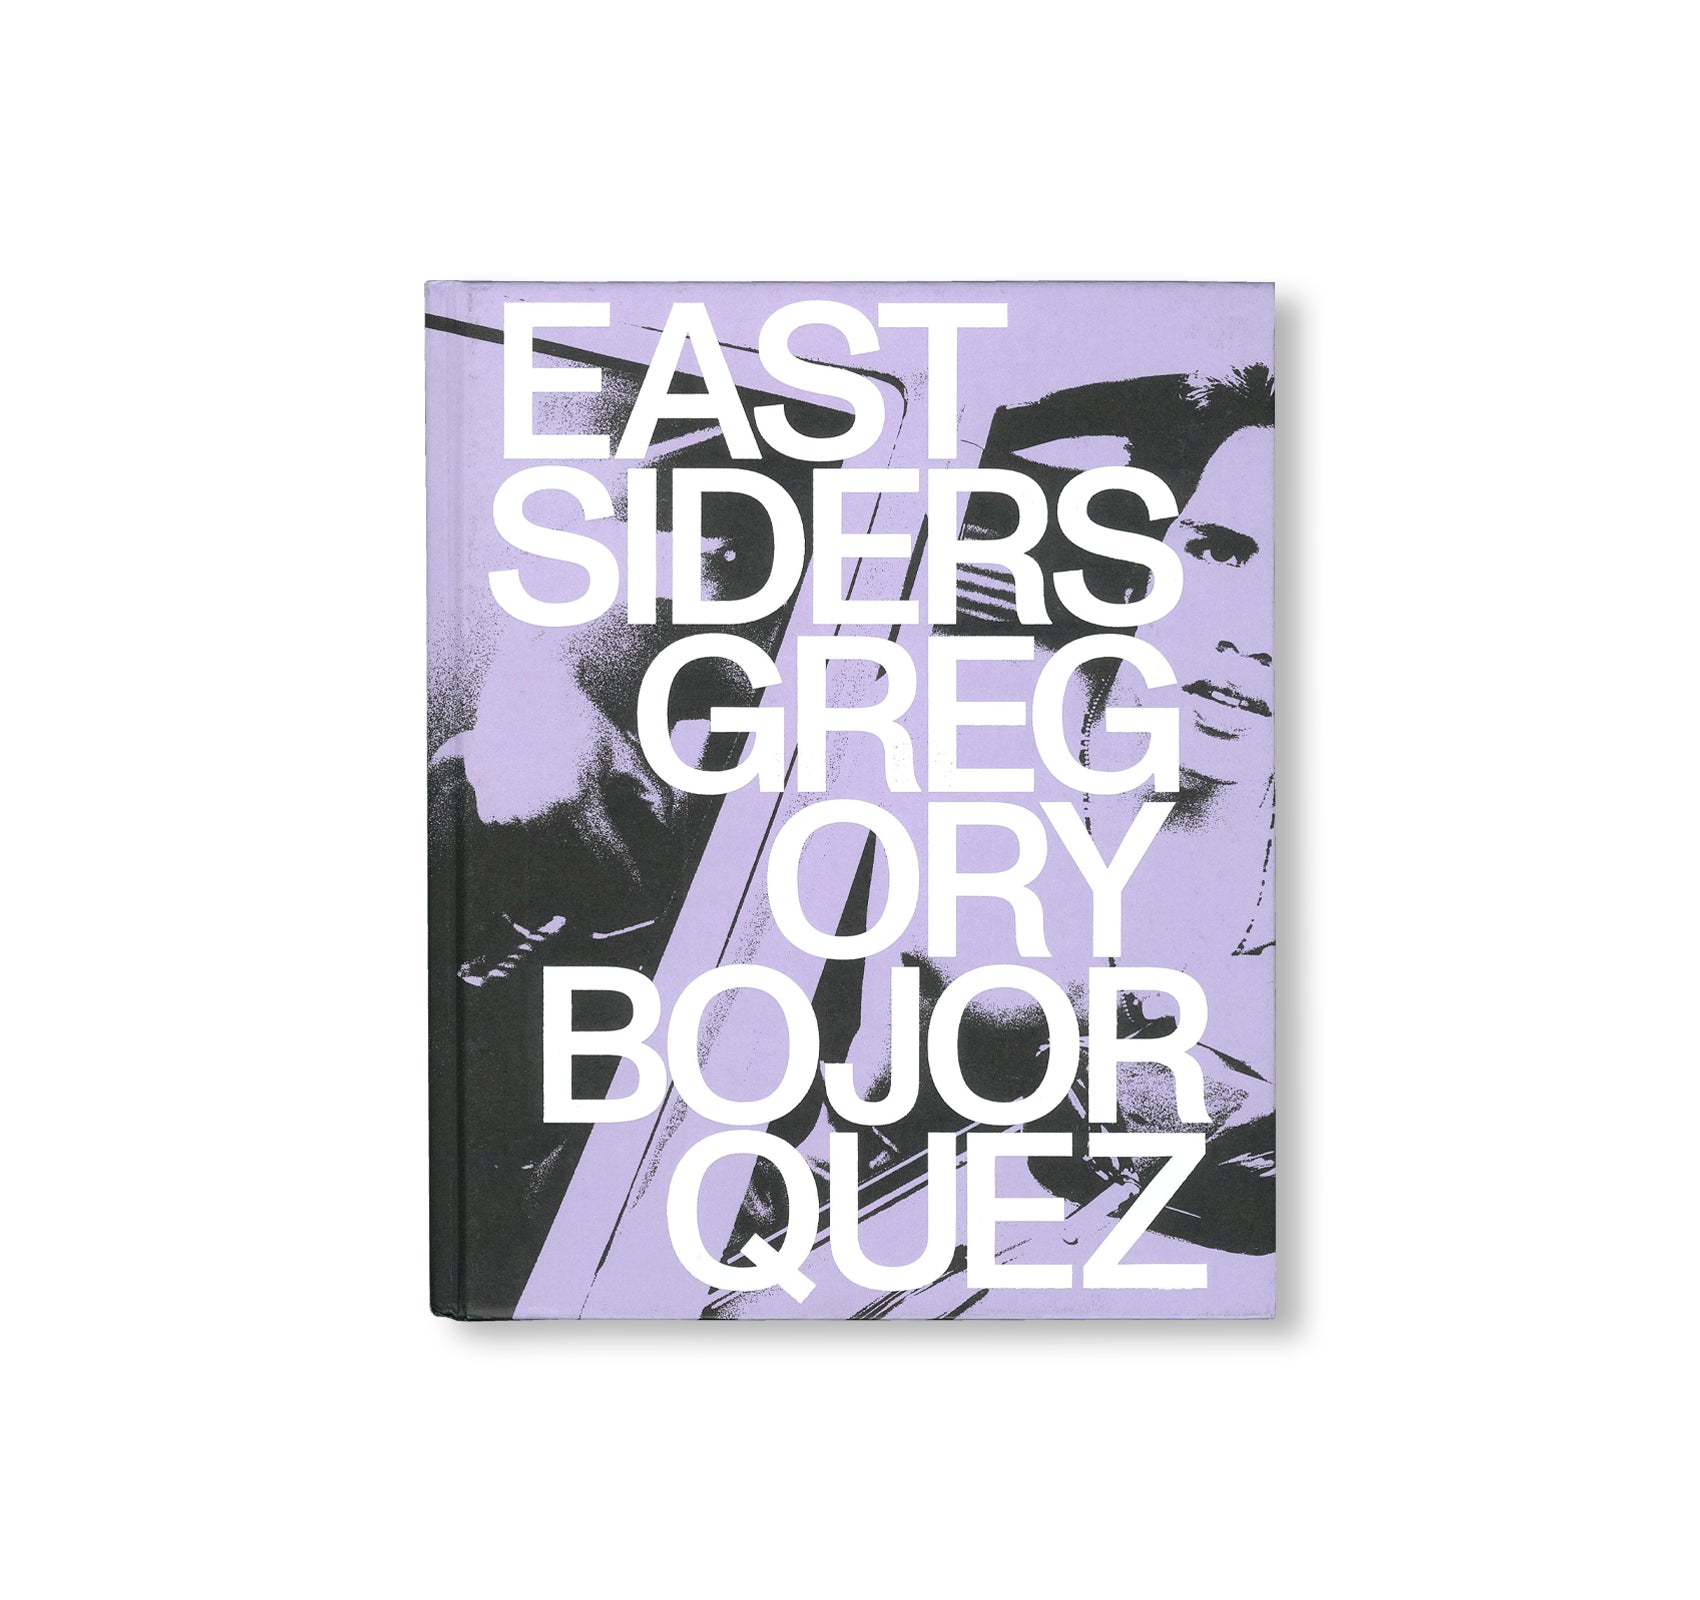 EASTSIDERS by Gregory Bojorquez